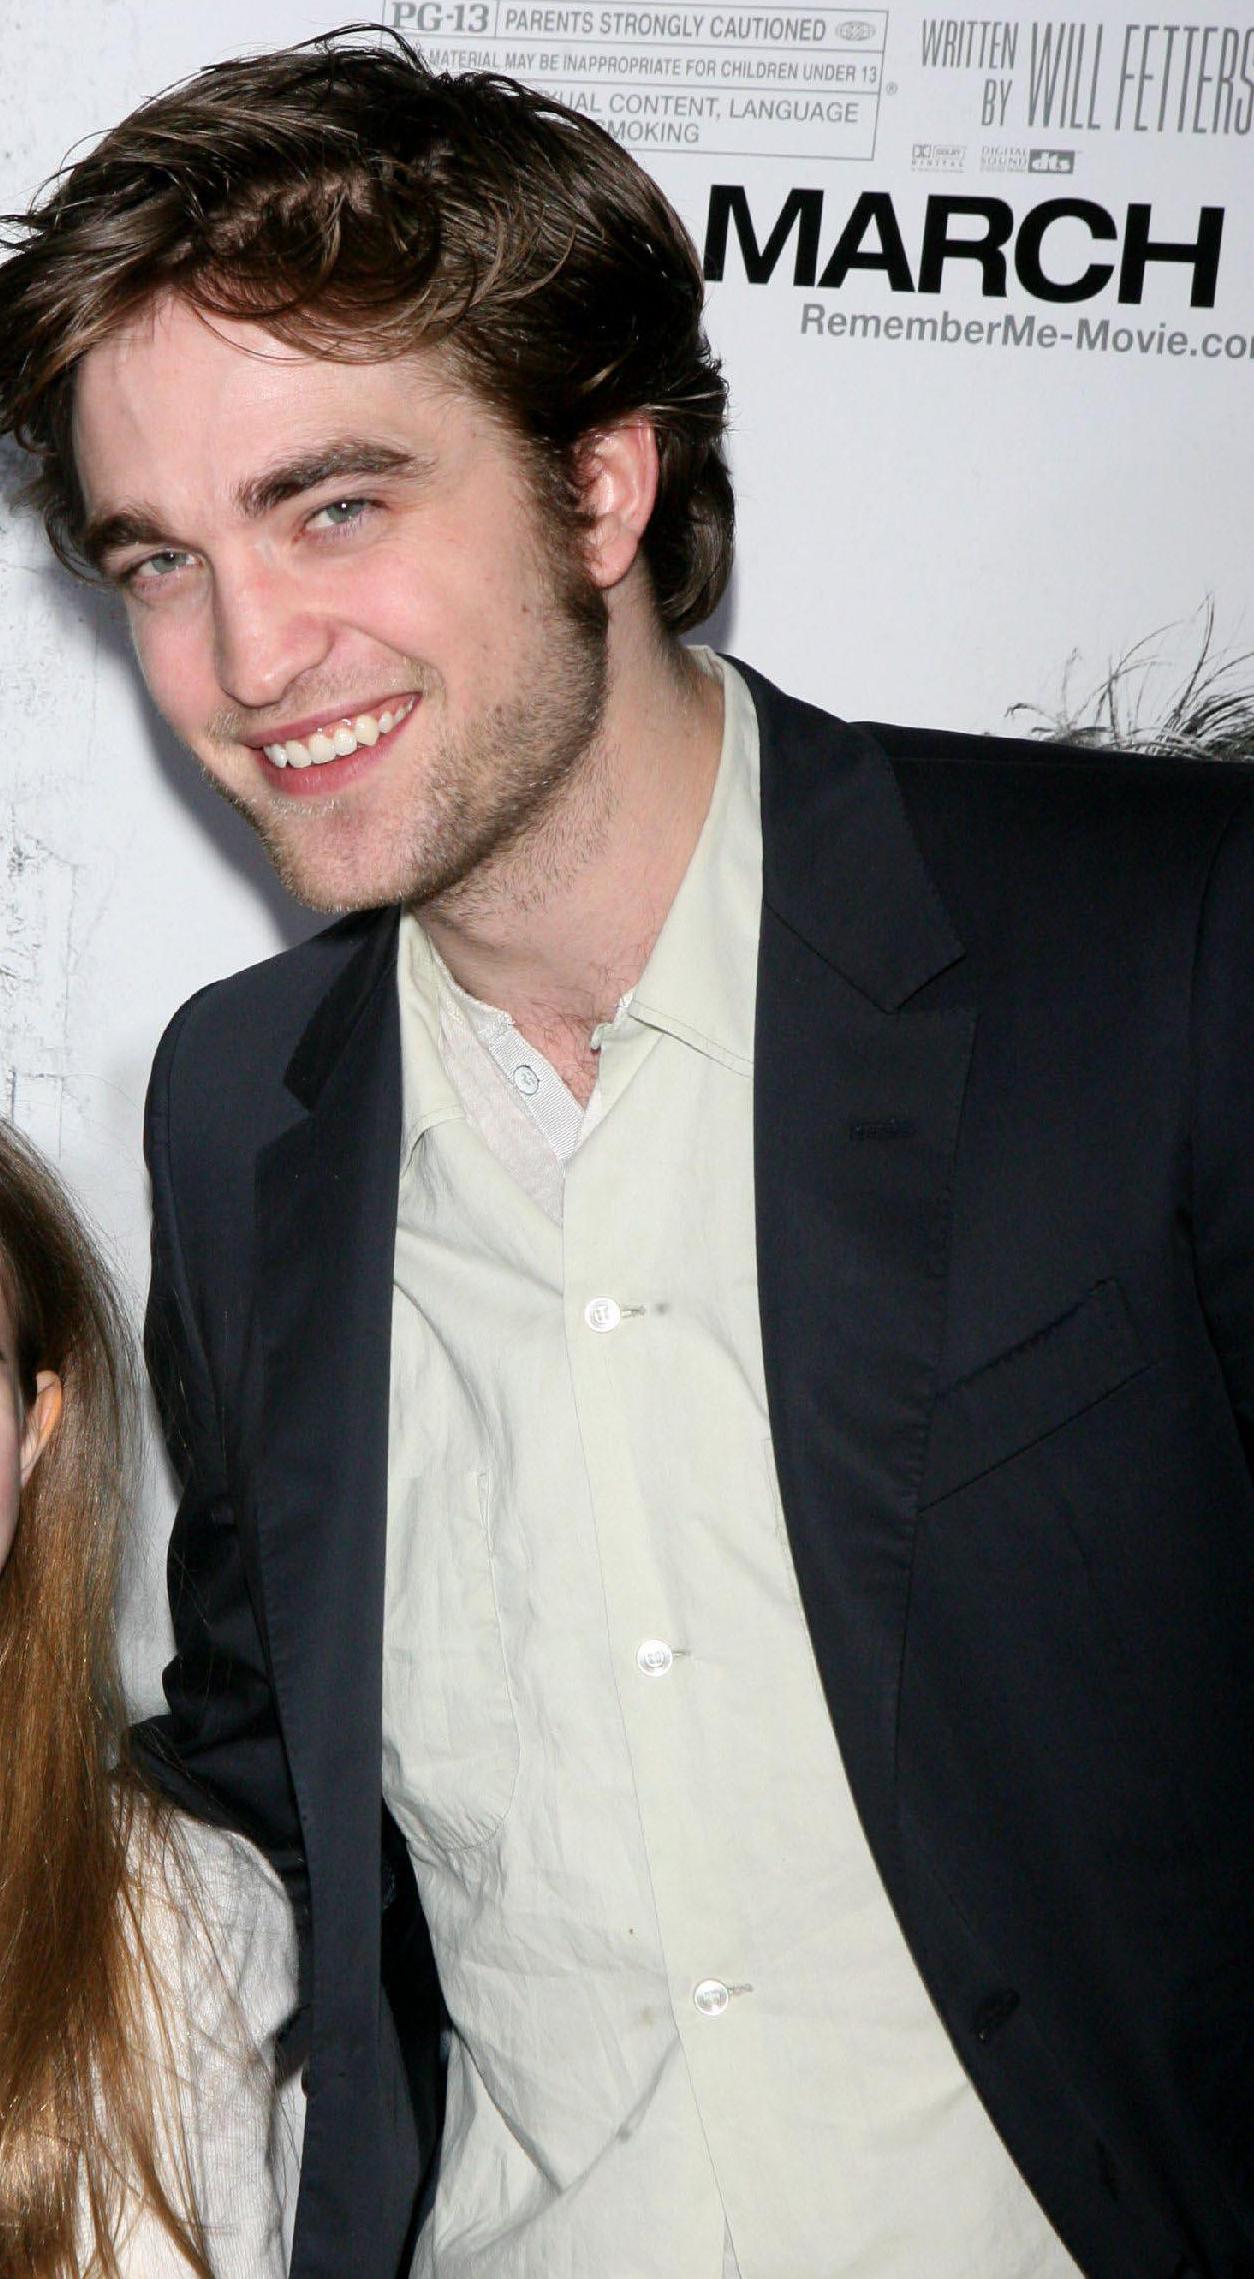 Robert Pattinson [Twilight] | The Male Celebrity